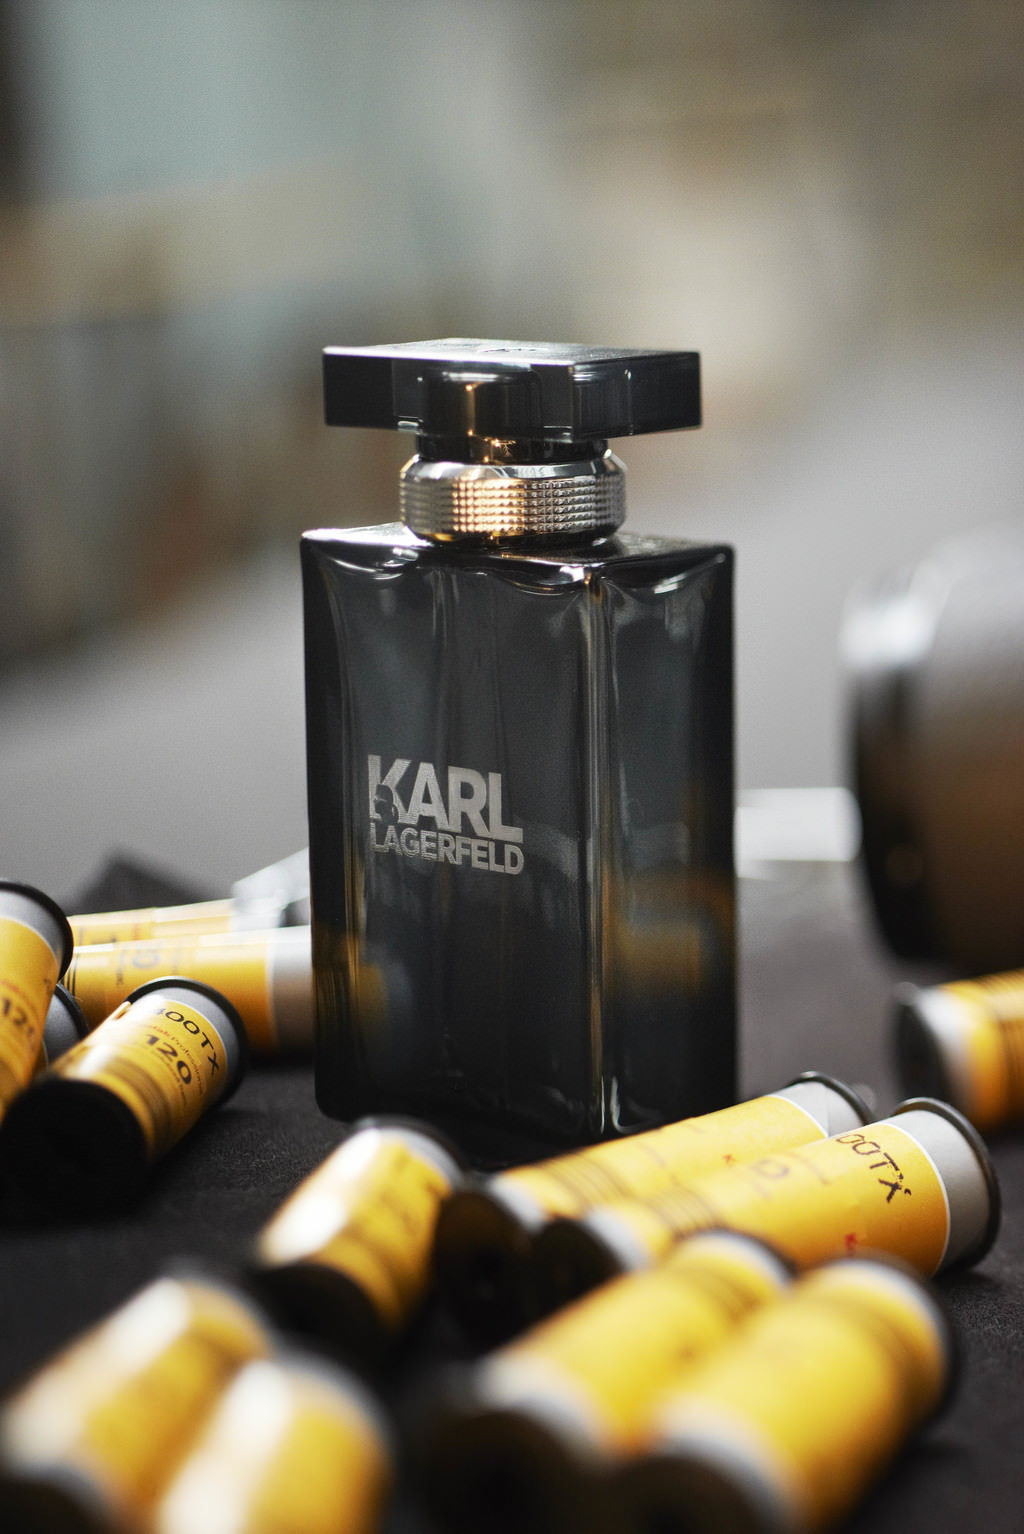 Karl Lagerfeld parfümüne kavuştuk!